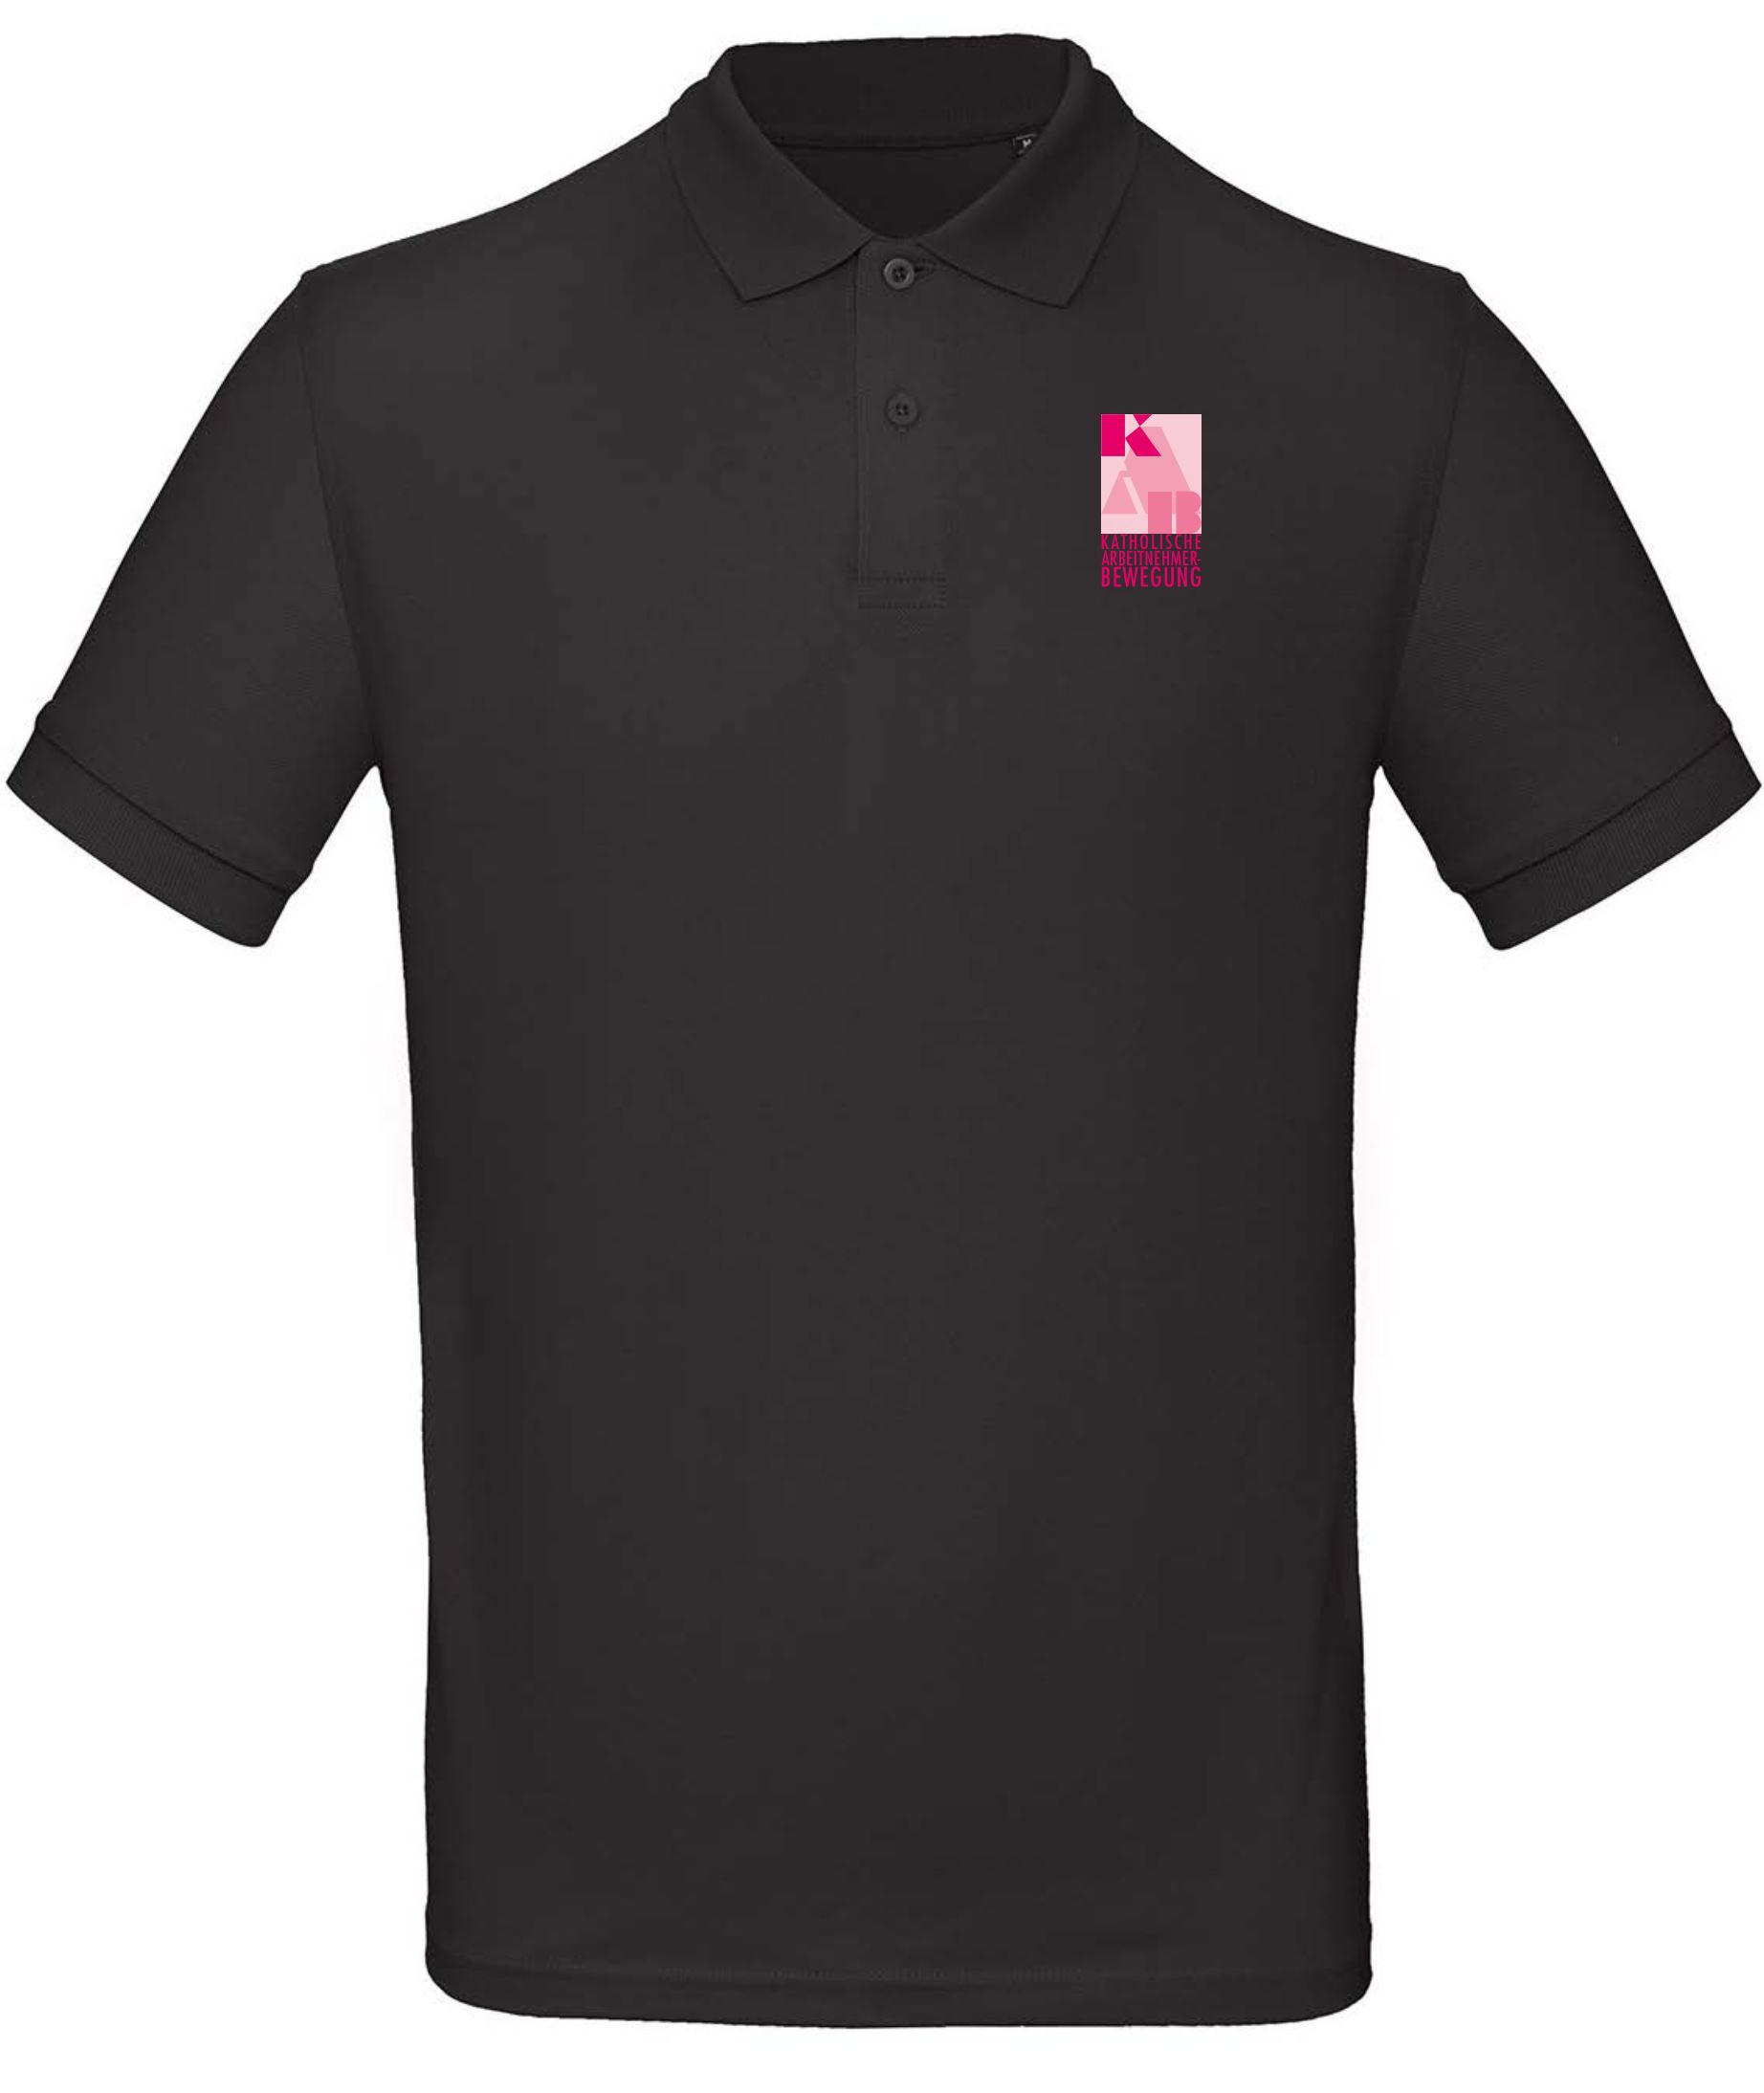 KAB Kampagnen-Kurzarm-Poloshirt schwarz unisex Gr. M